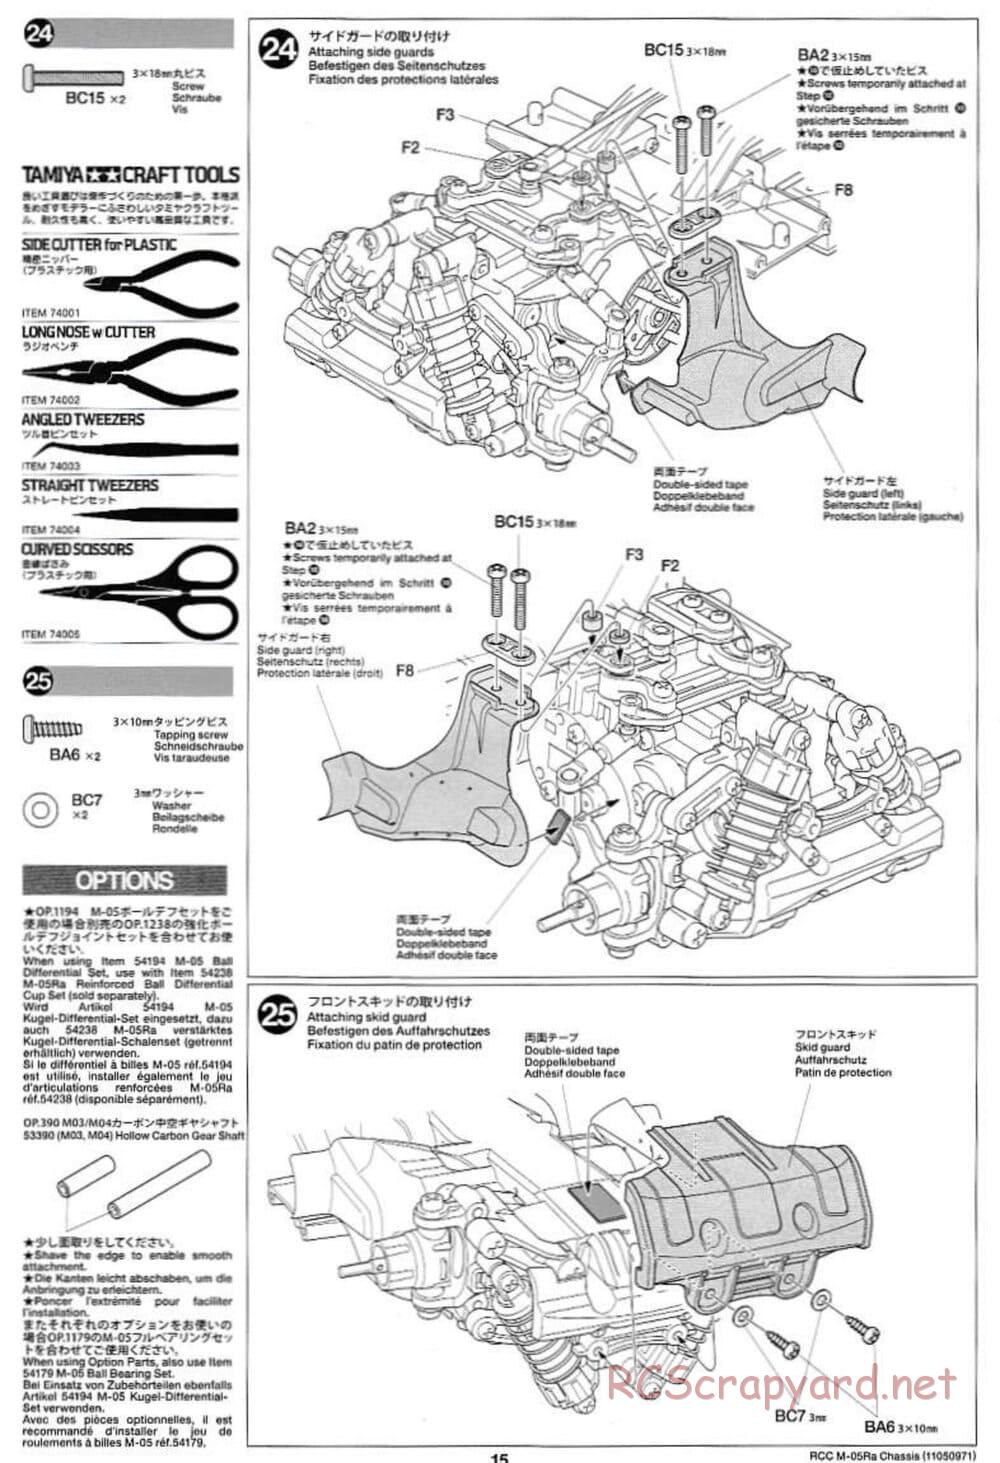 Tamiya - M-05Ra Chassis - Manual - Page 15